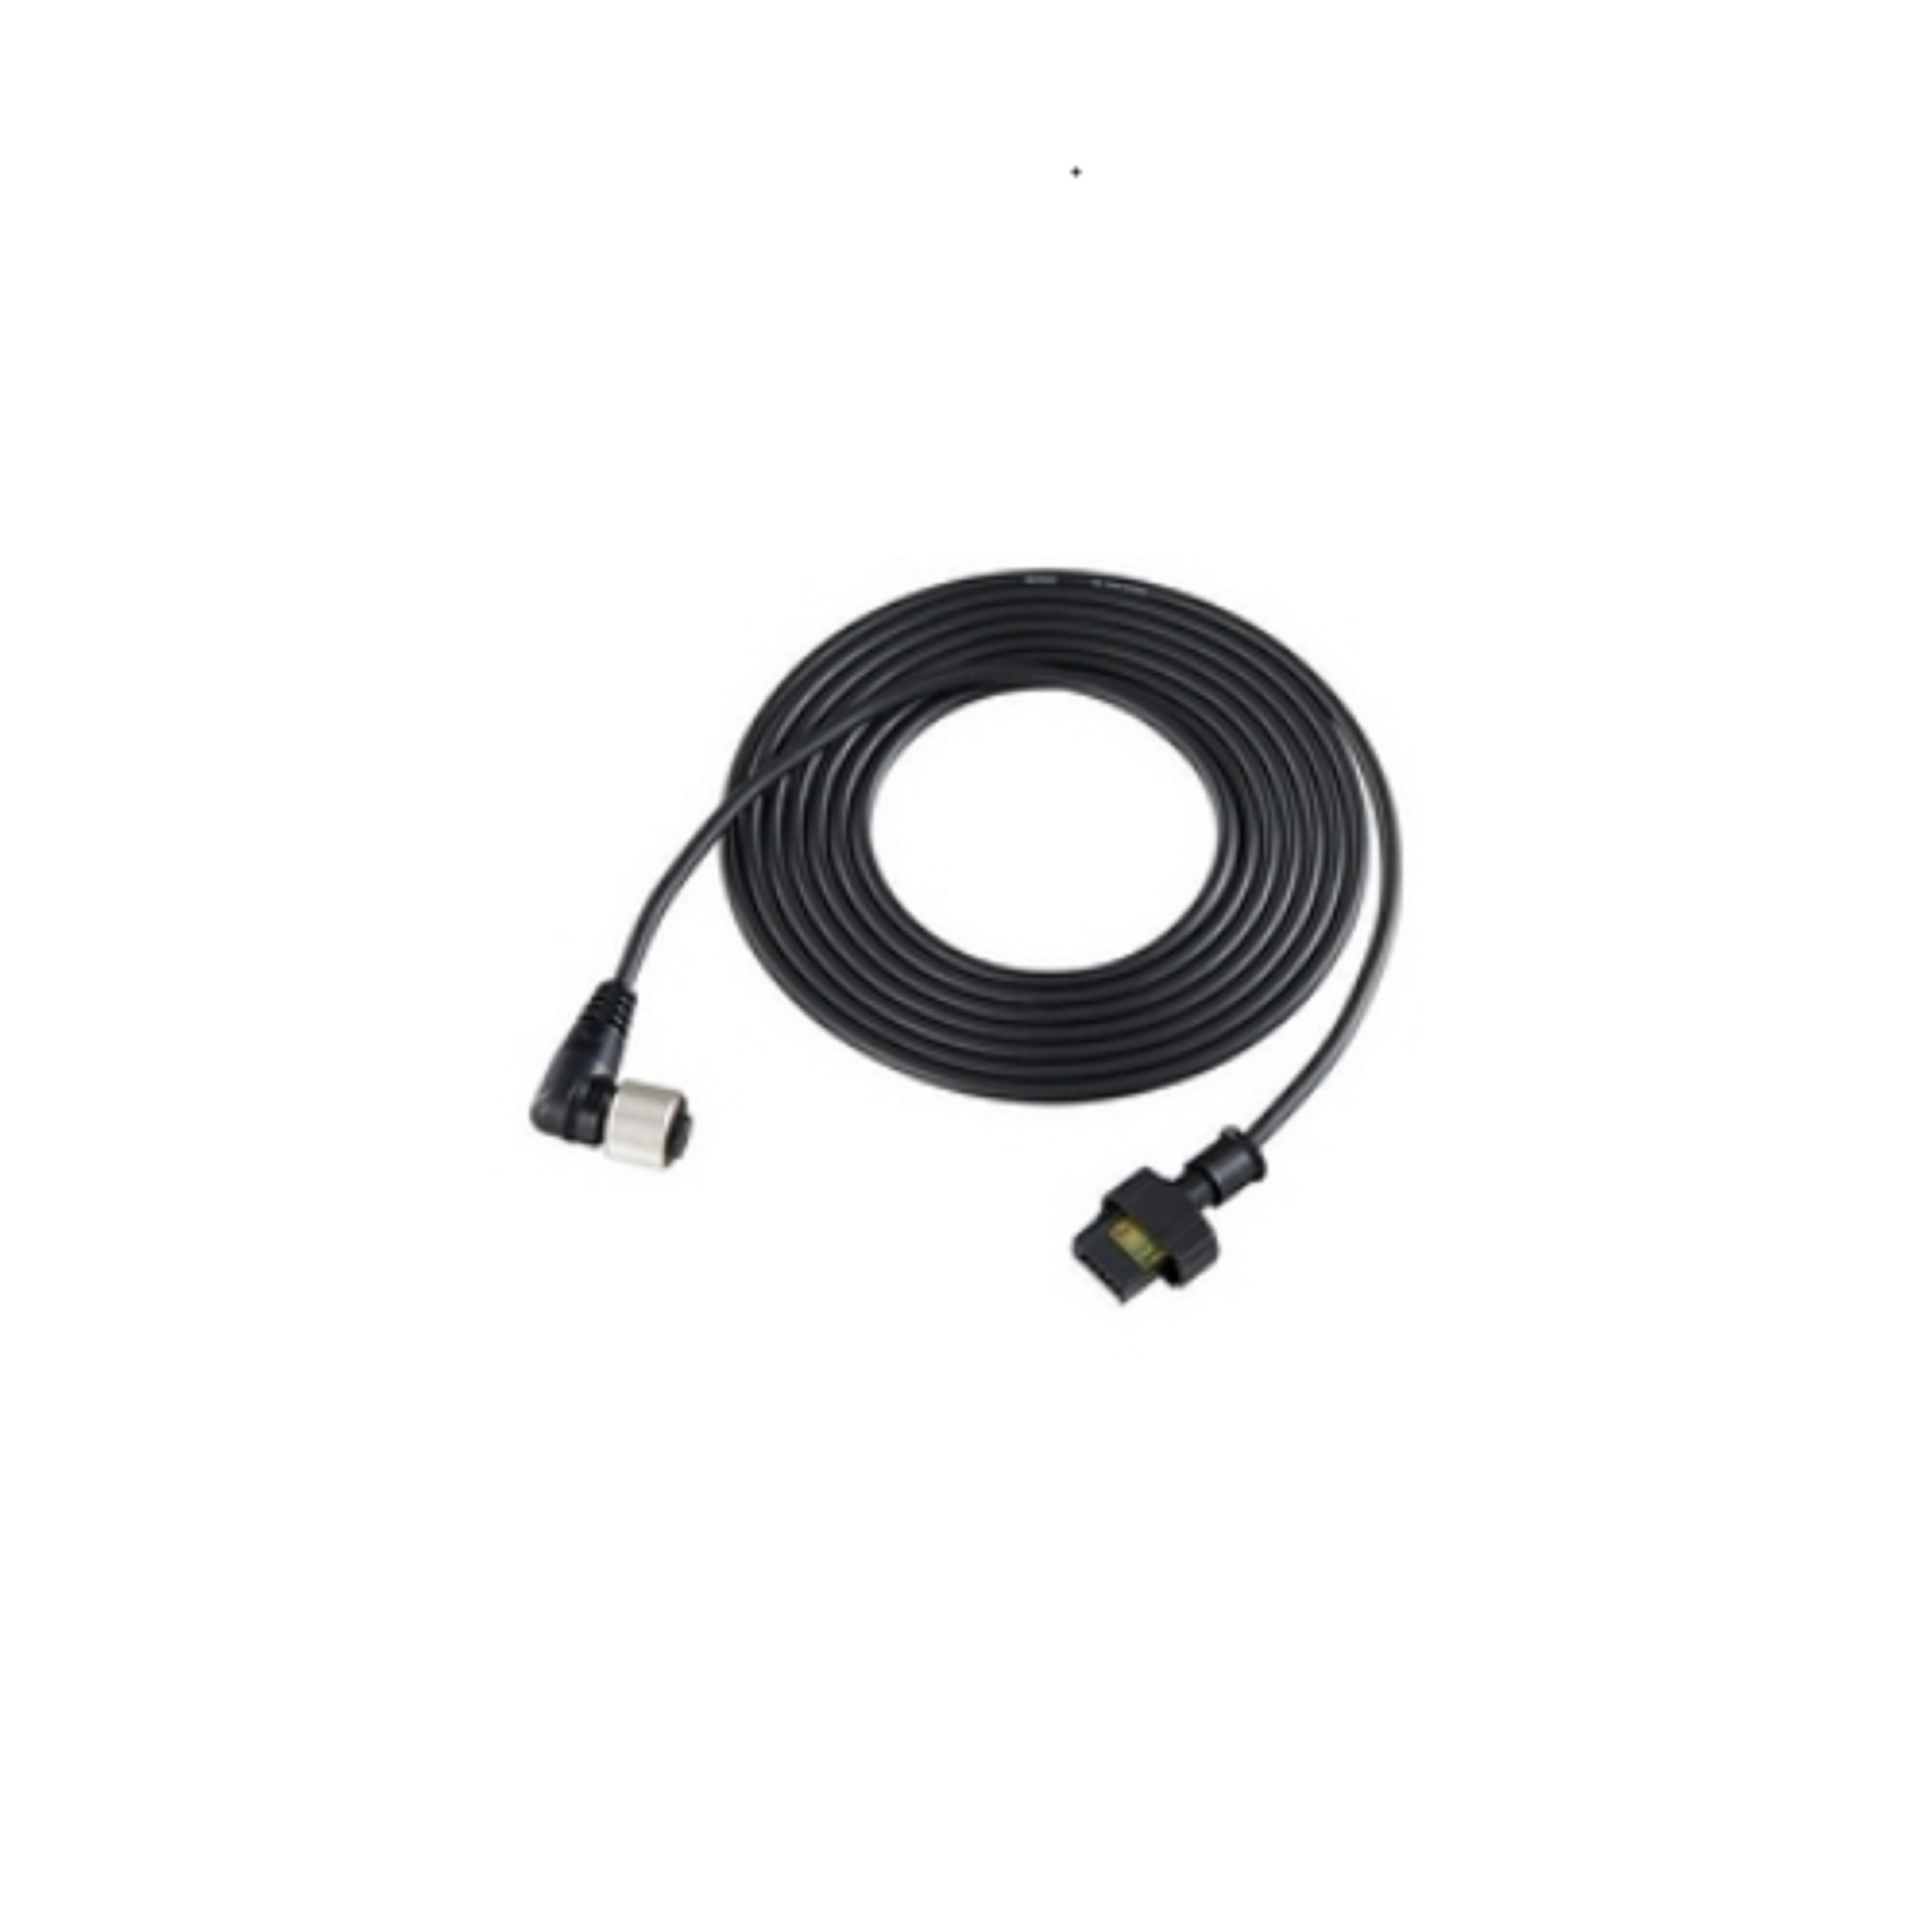 Brand New Keyence Fiber Cable OP-73864 